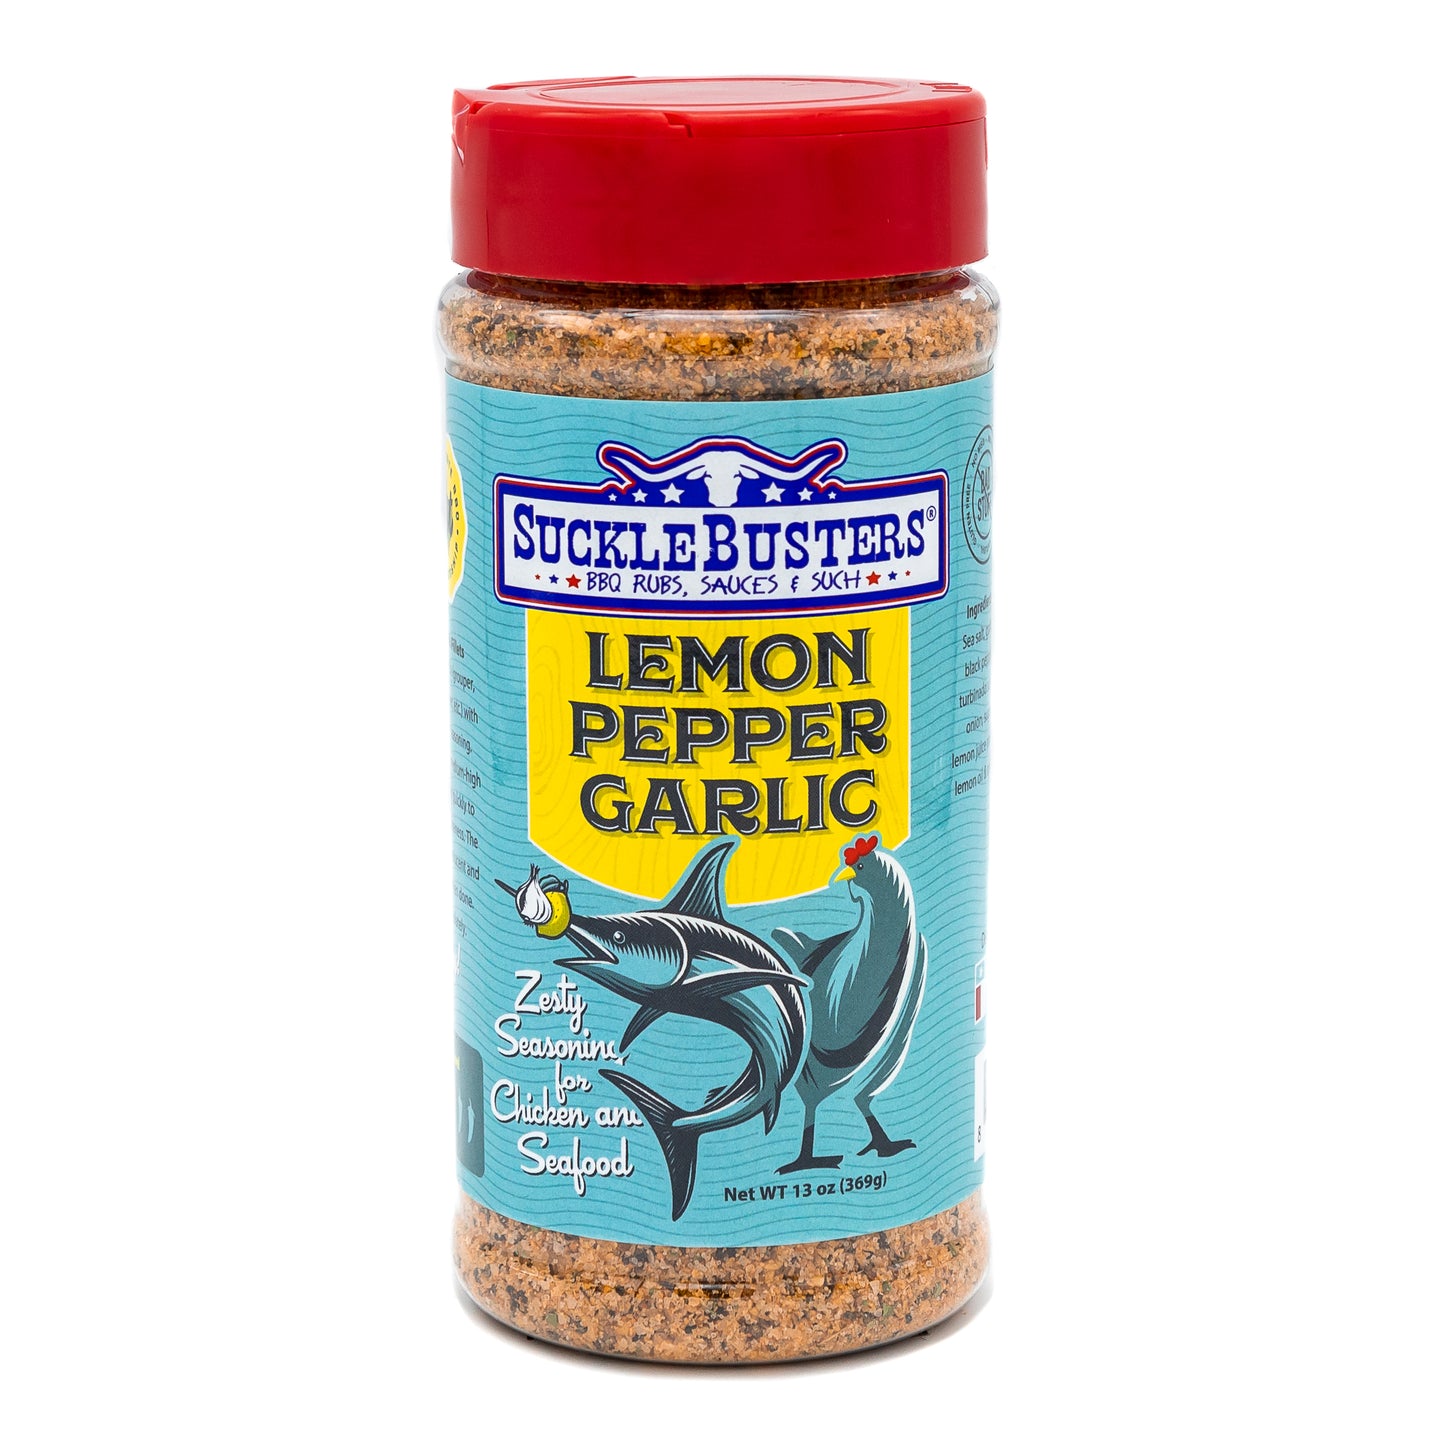 SUCKLEBUSTERS: Lemon Pepper Garlic Rub – 411g